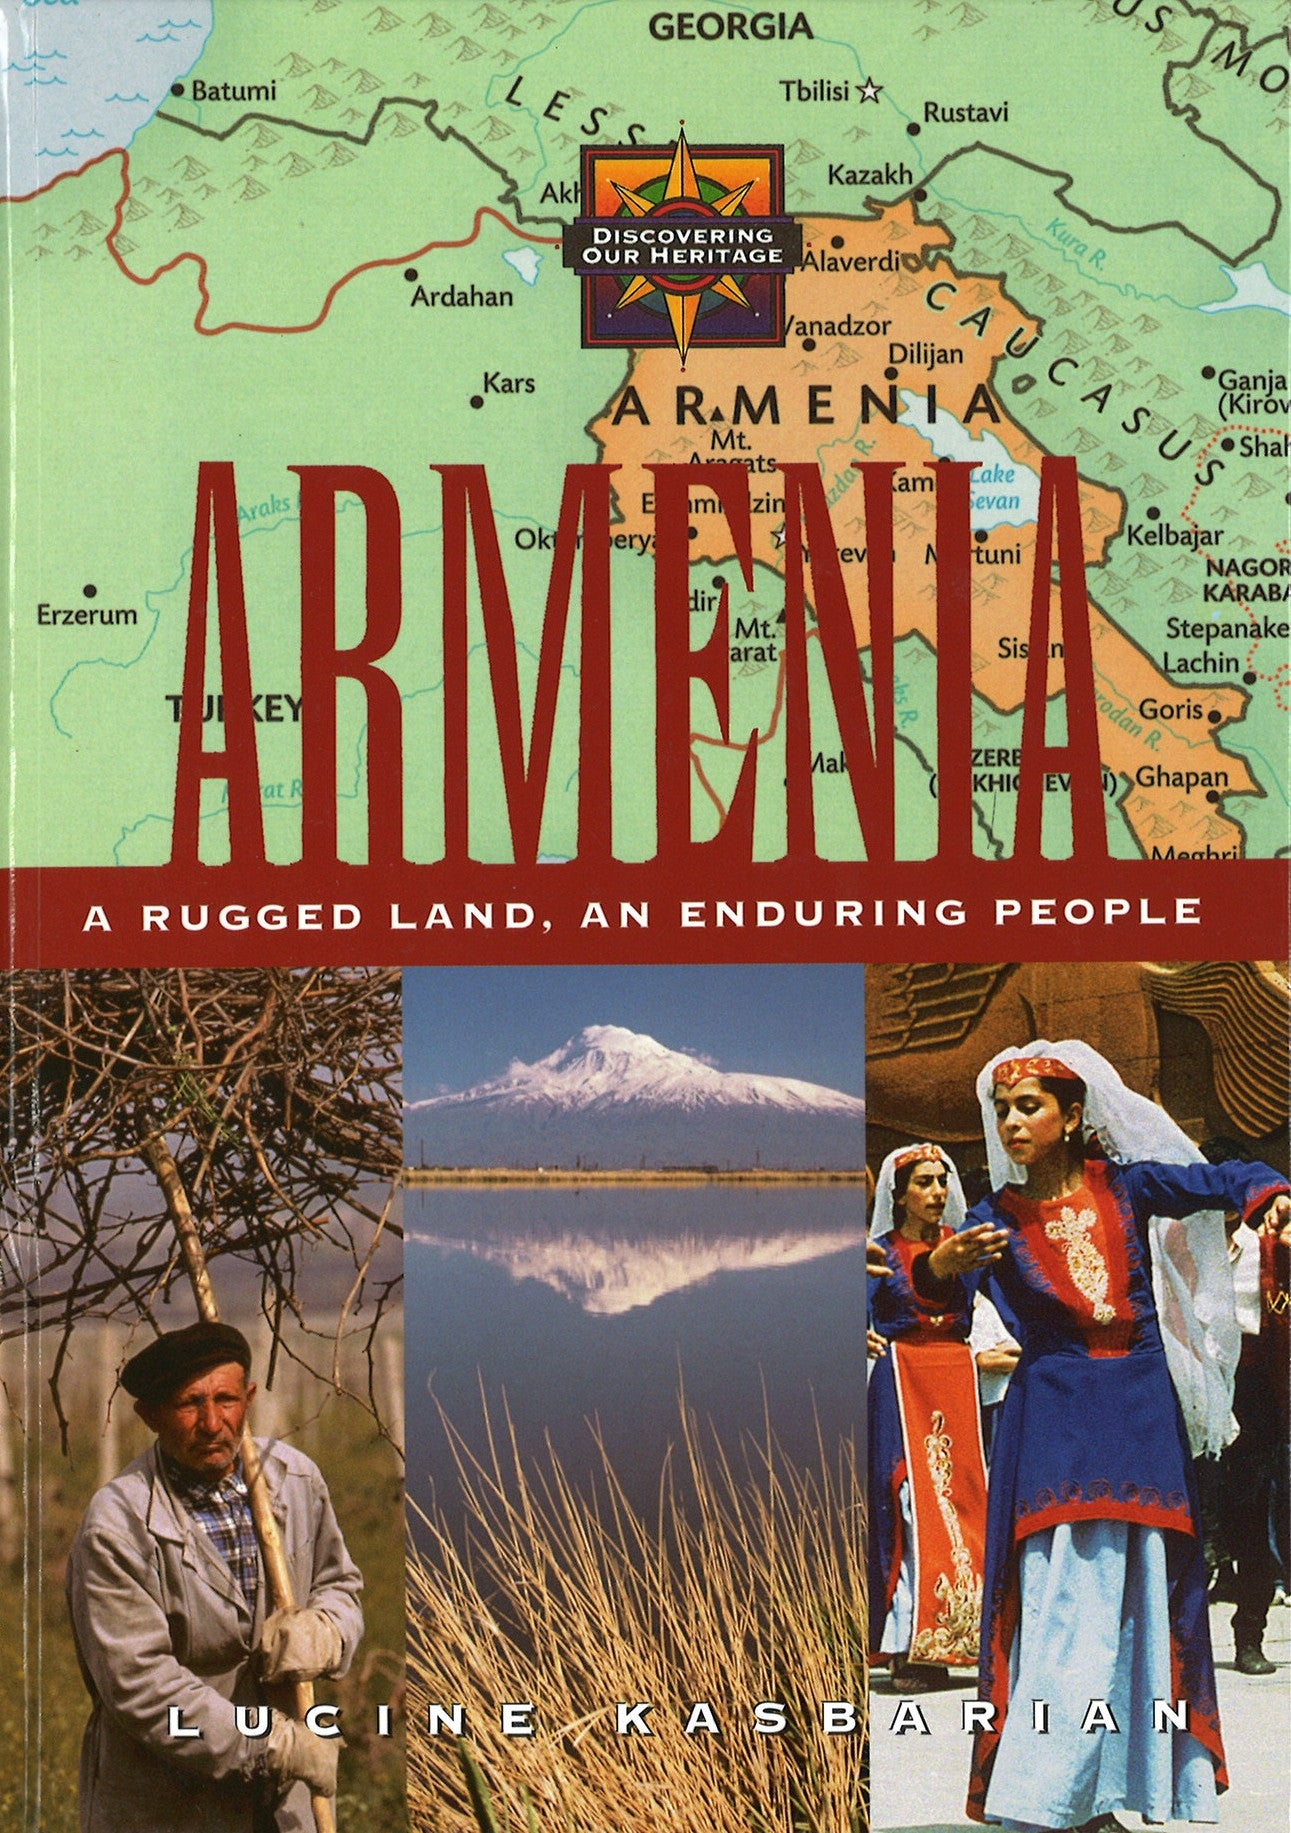 ARMENIA: A Rugged Land, An Enduring People